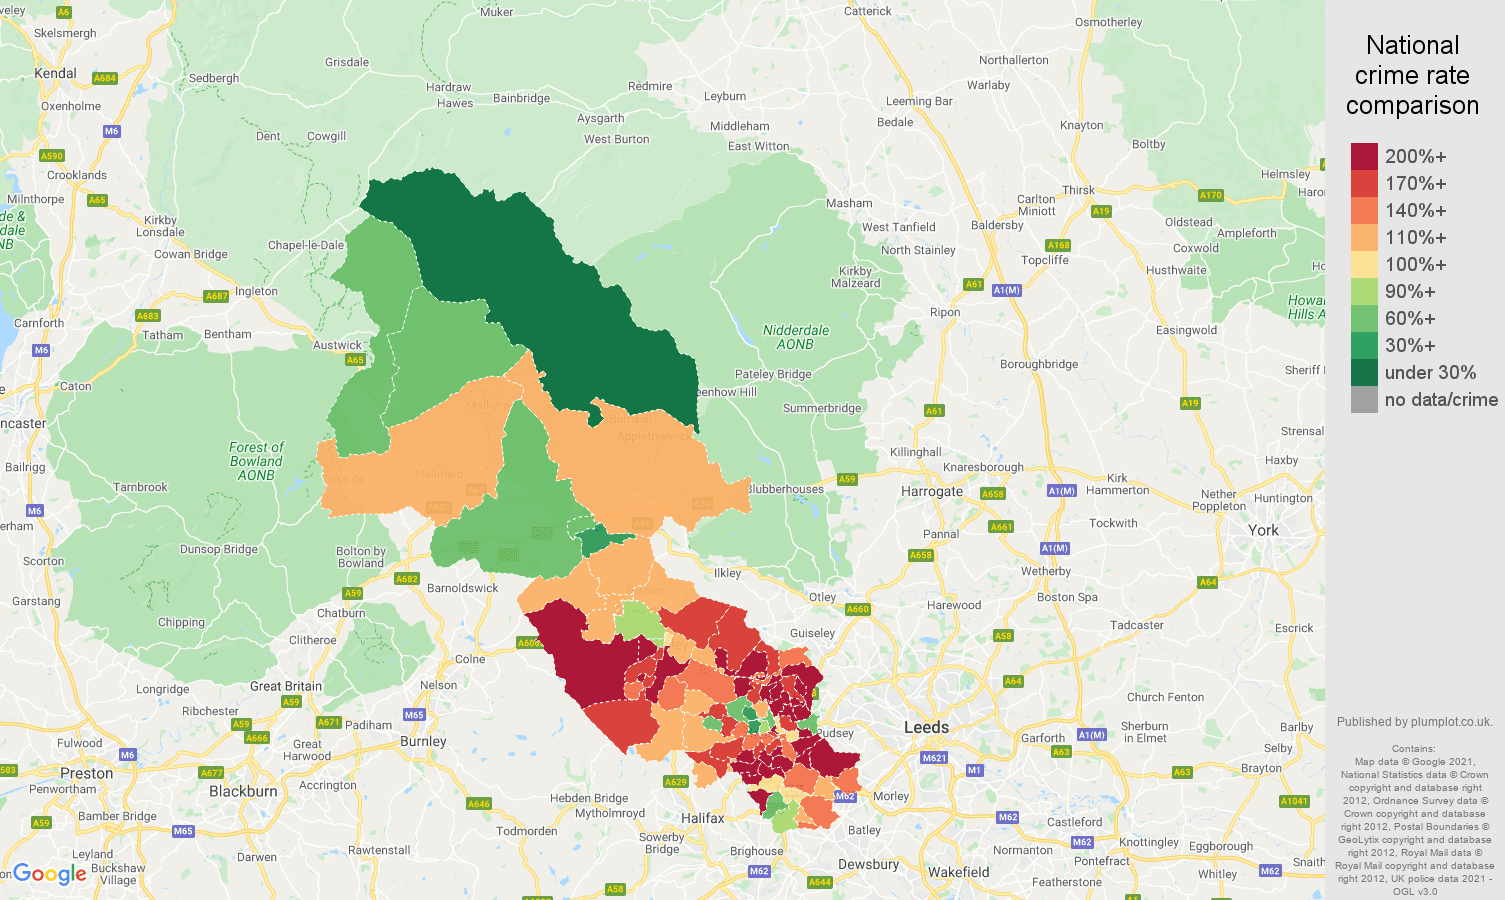 Bradford burglary crime rate comparison map